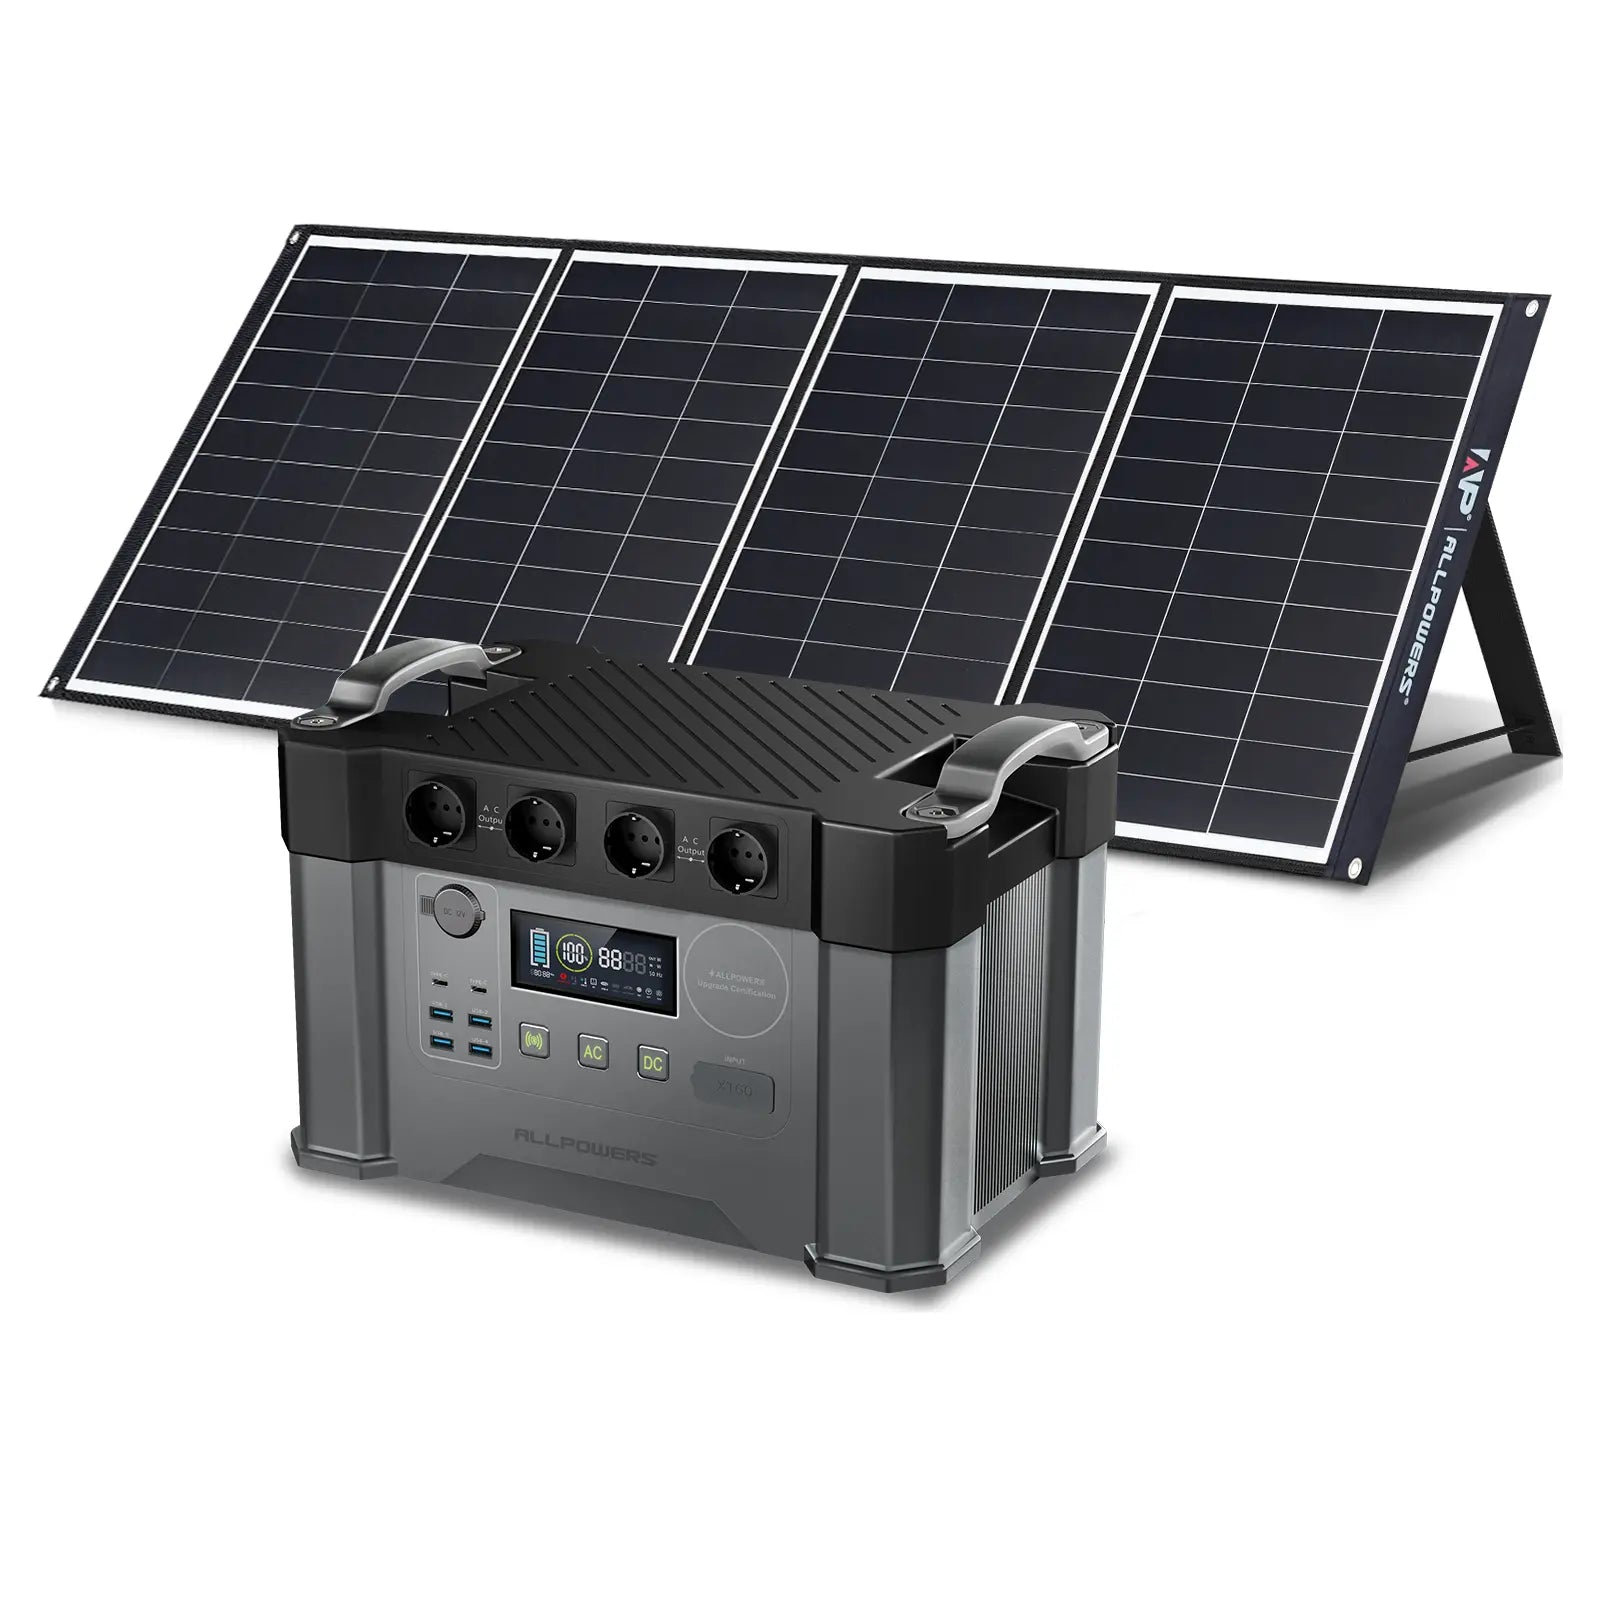 Kit Generador Solar ALLPOWERS 2000W (S2000 + SP035 Panel Solar 200W)